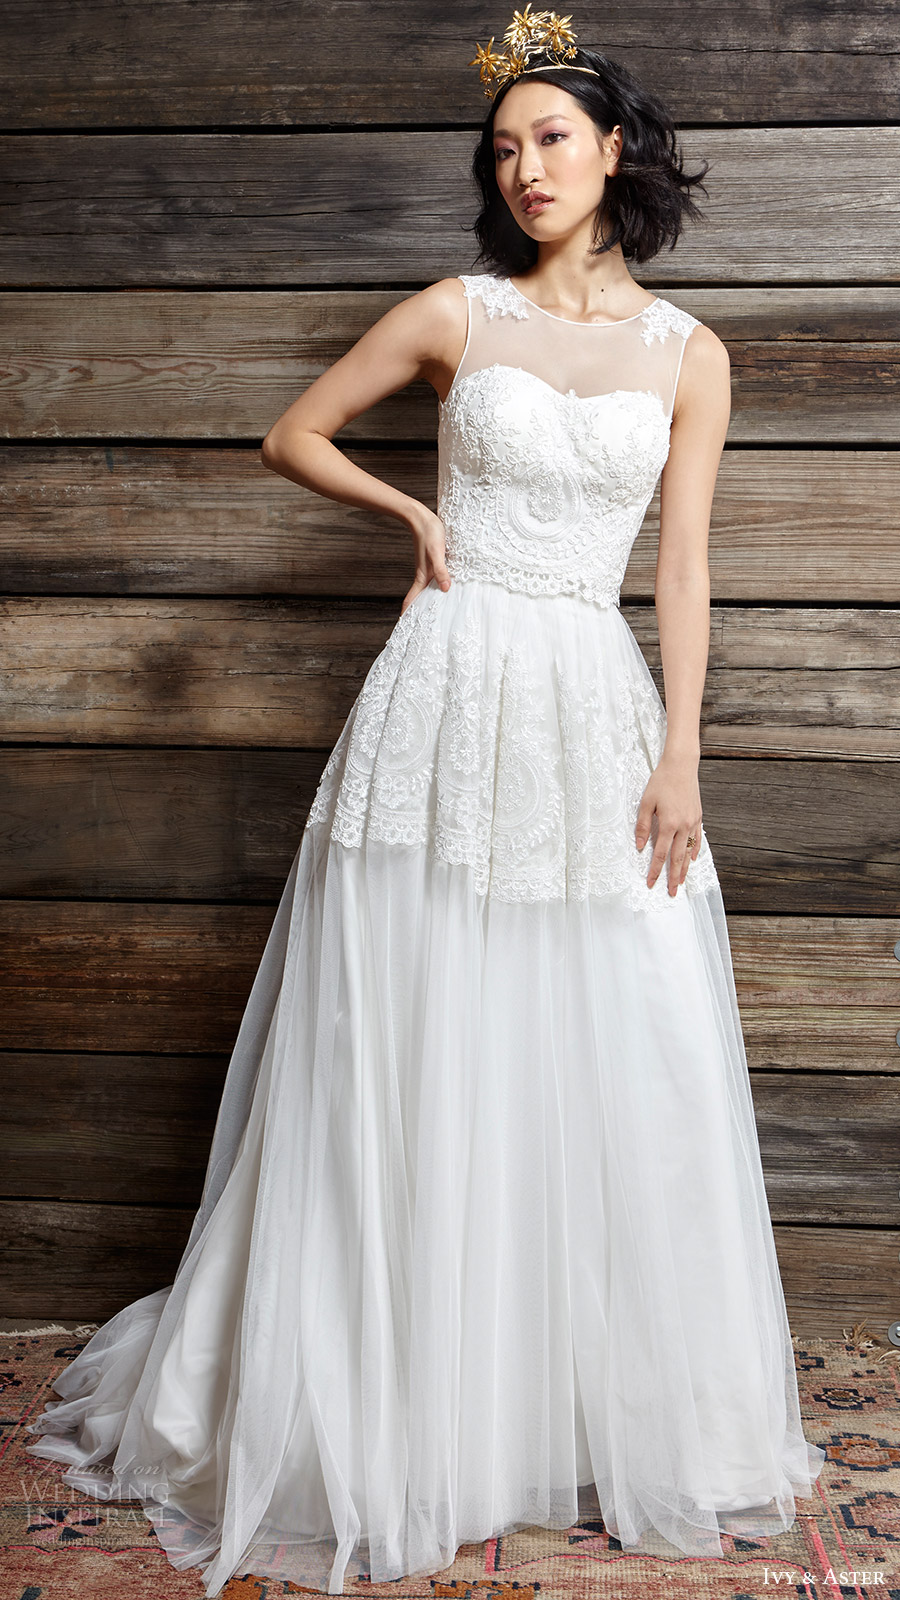 ivy aster bridal spring 2017 two piece wedding dress leighton sleeveless top lillian skirt